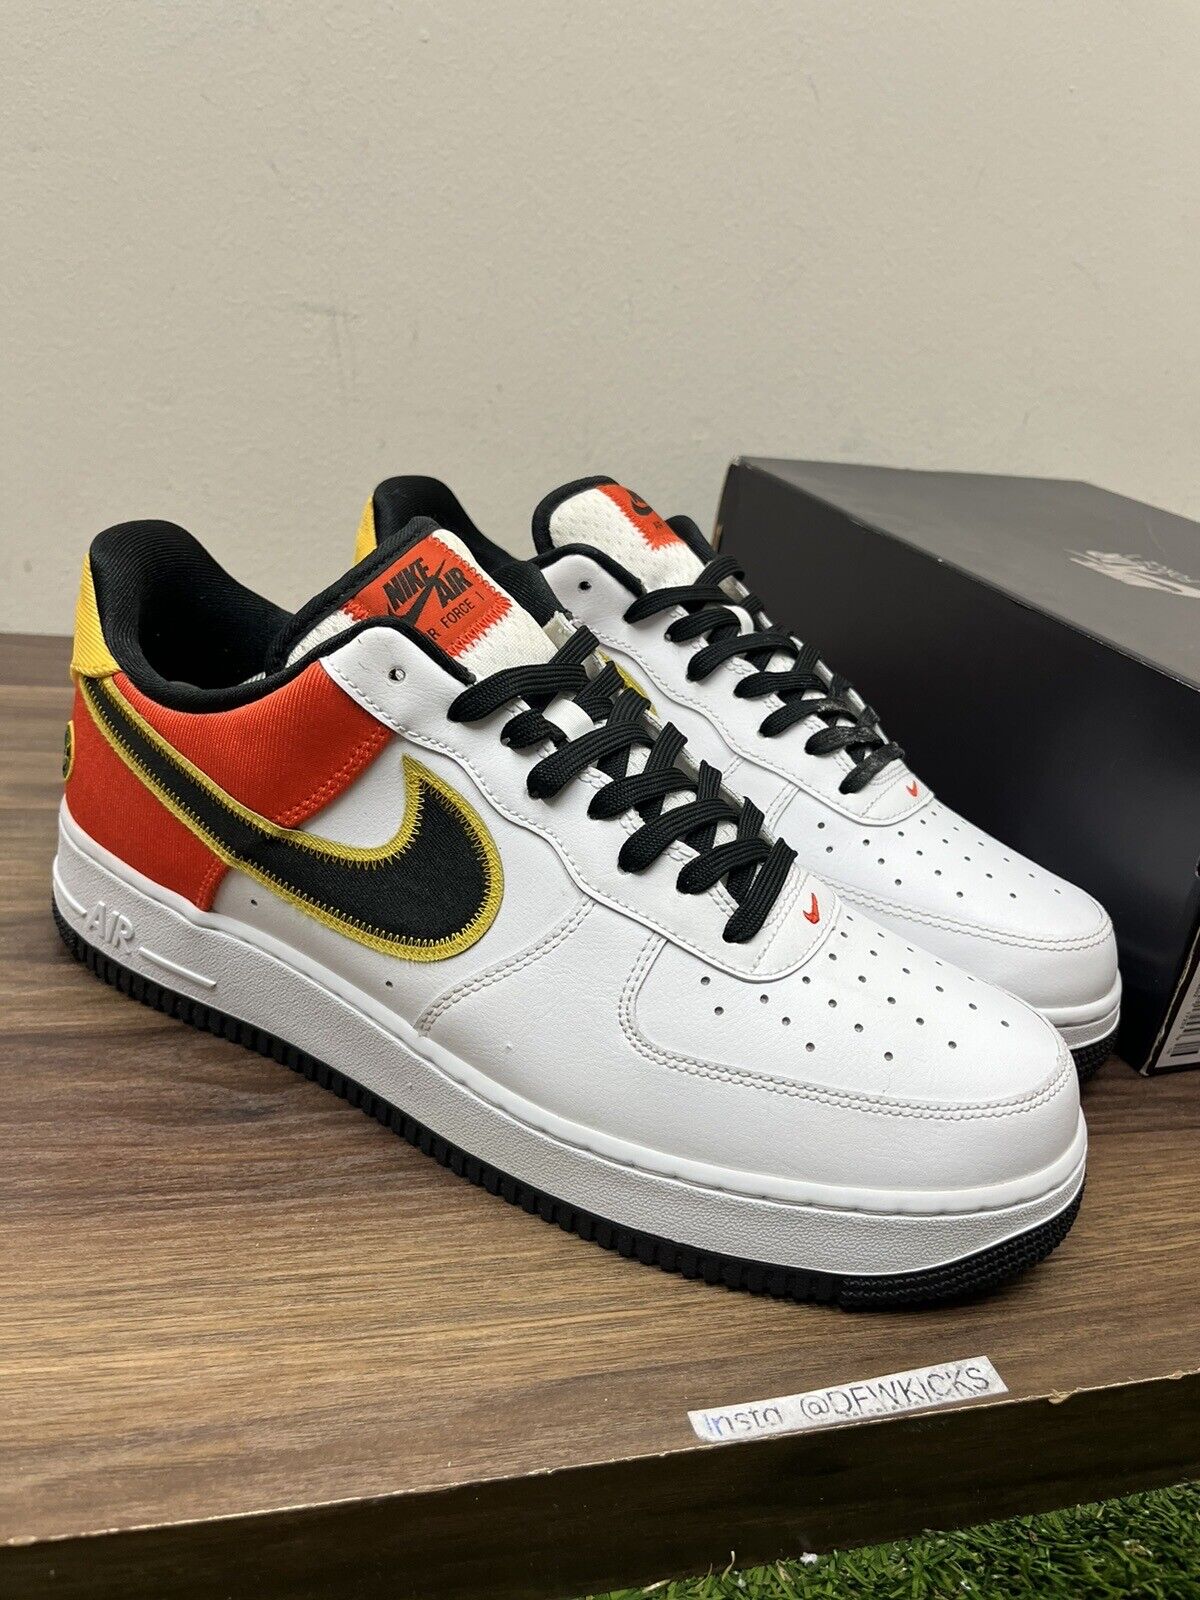 Air Force 1 Low 'Raygun' - Nike - CU8070 100 - white/black/orange Sz 13 sneakers